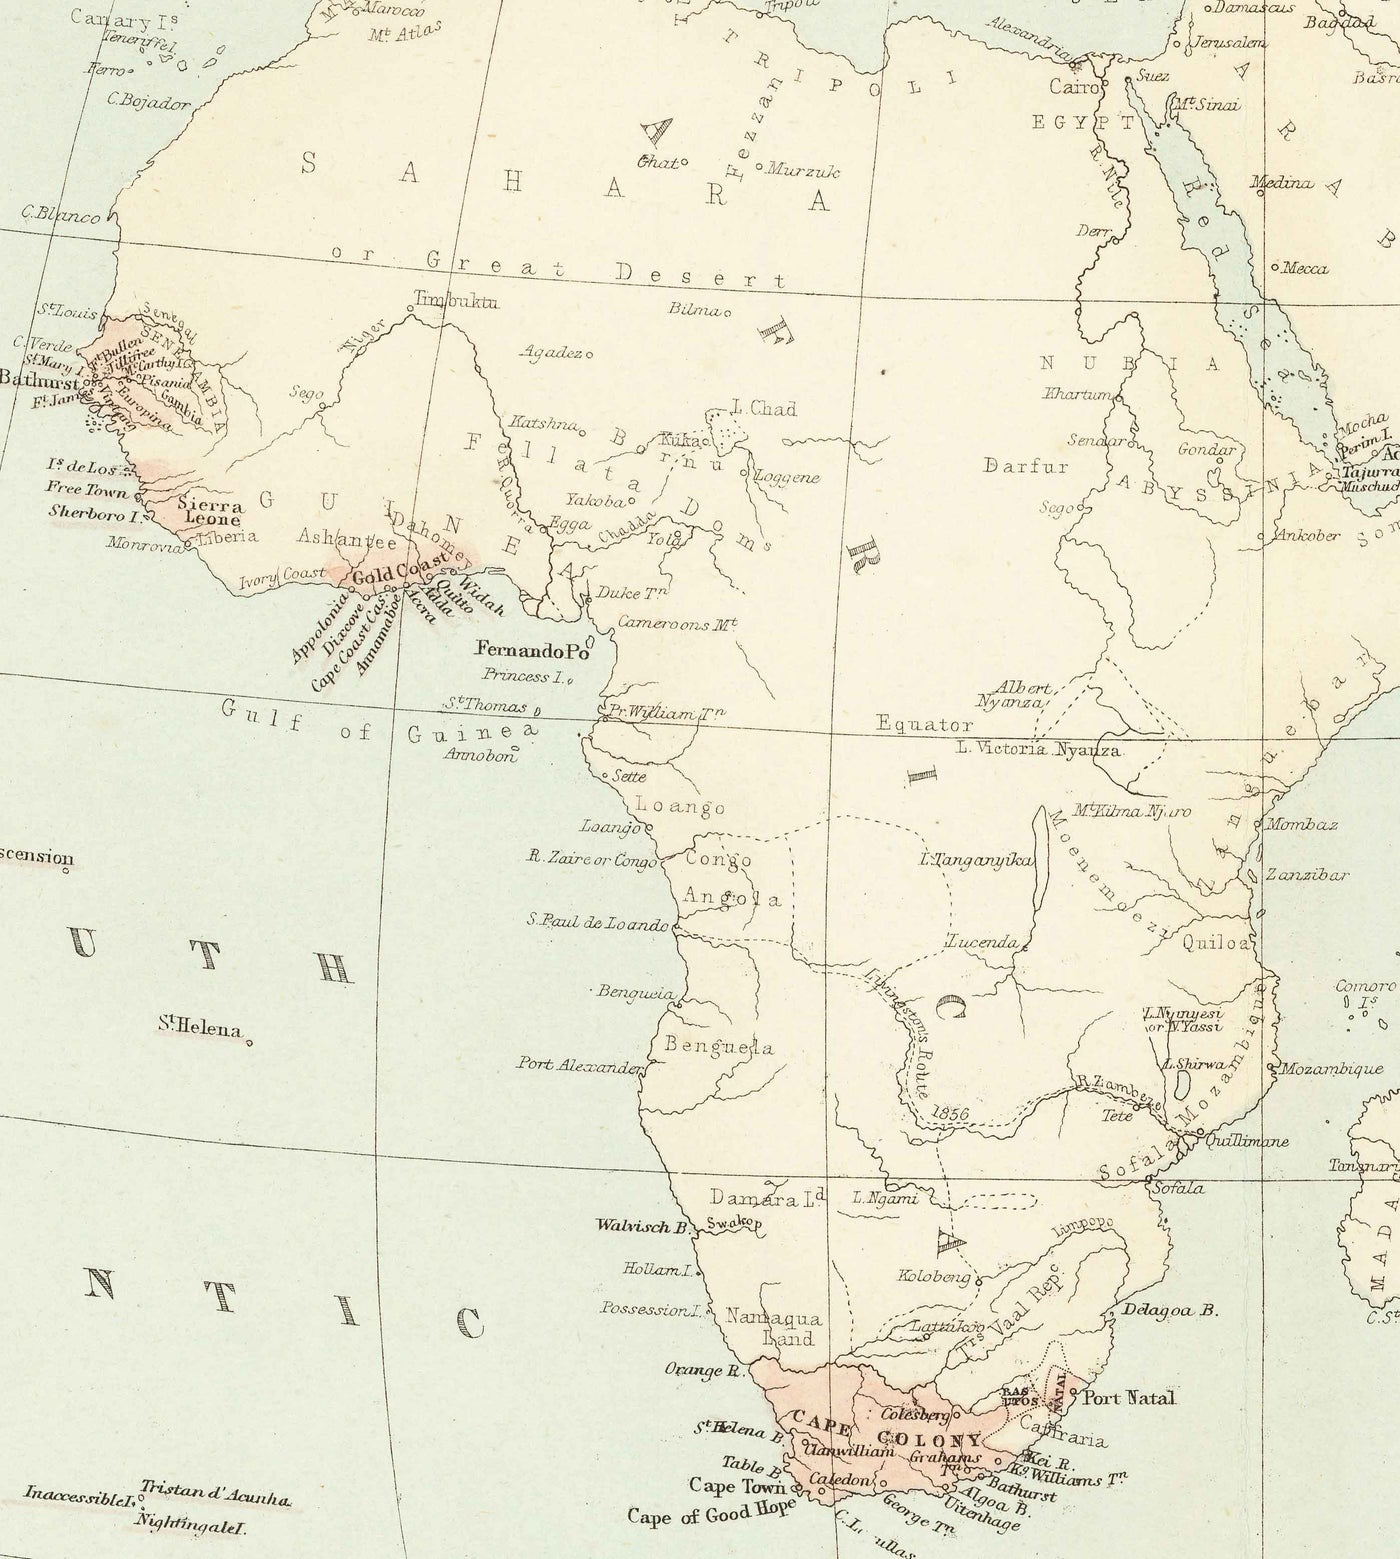 Old World Map of thet British Empire, 1872 by Fullarton - Inhabitants & Population, Commonwealth, Colonialism